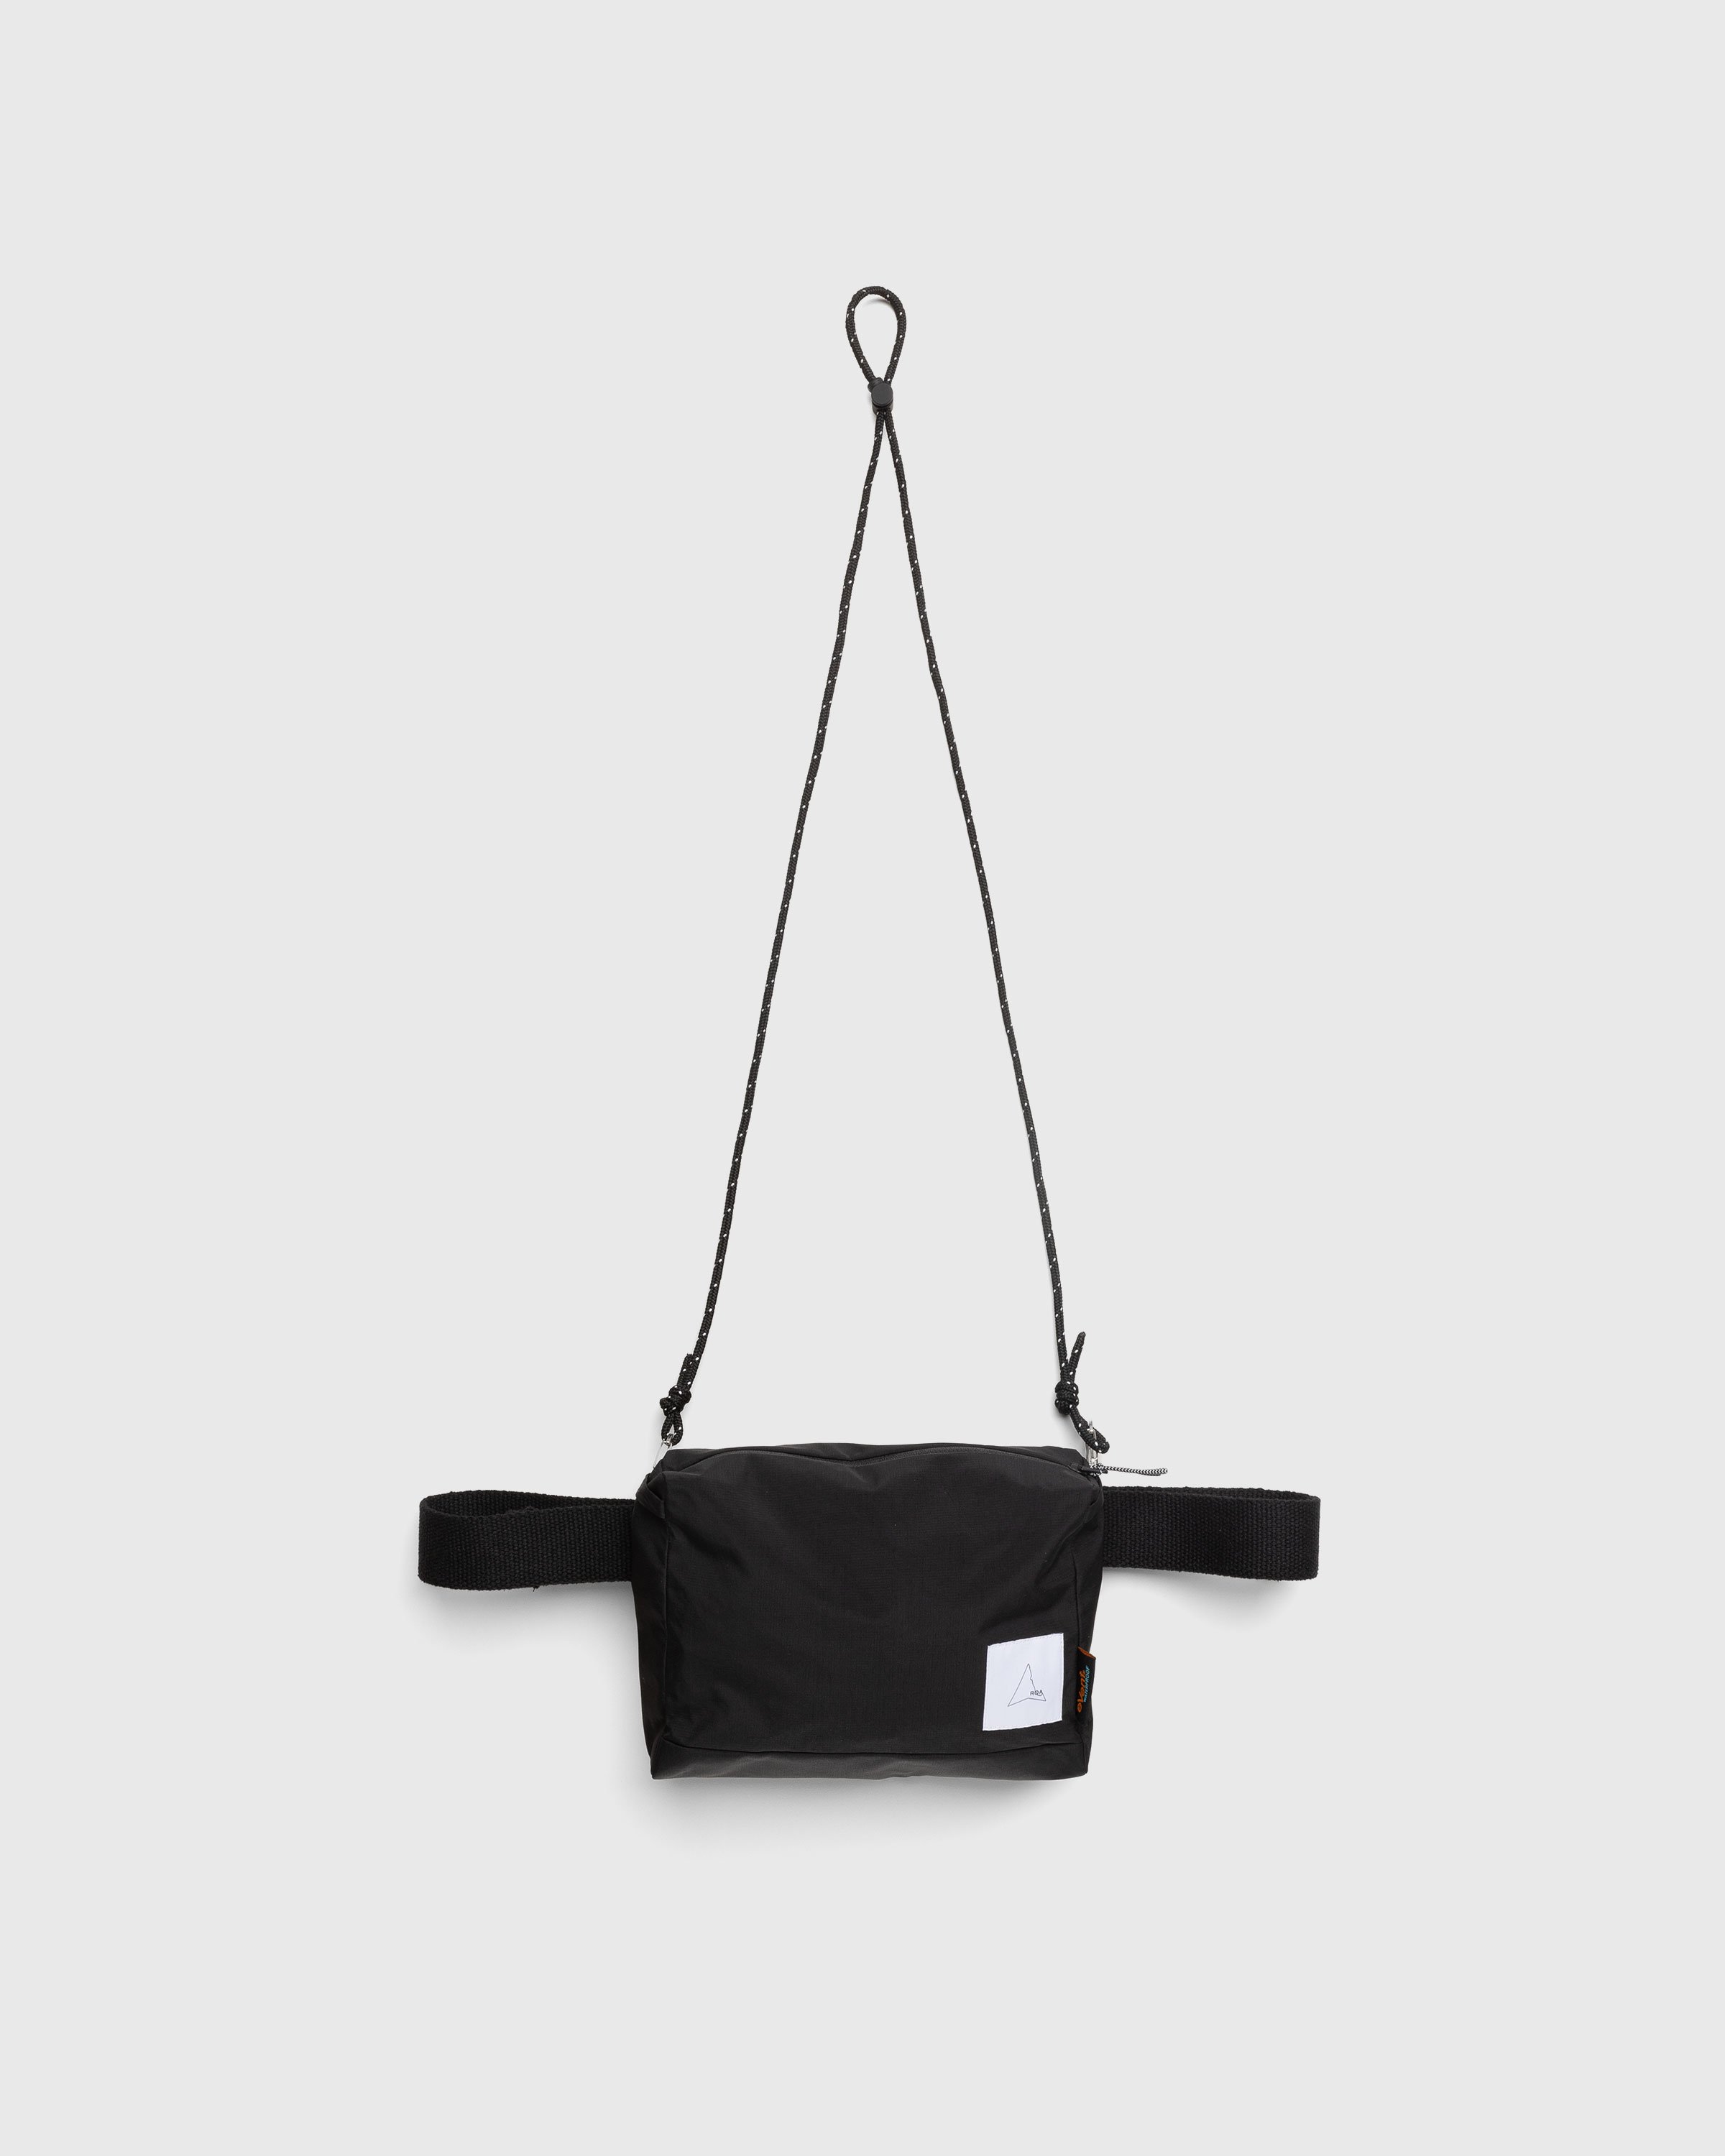 Eastpak x Raf Simons 'Sleek sling' crossbody logo embellished bag